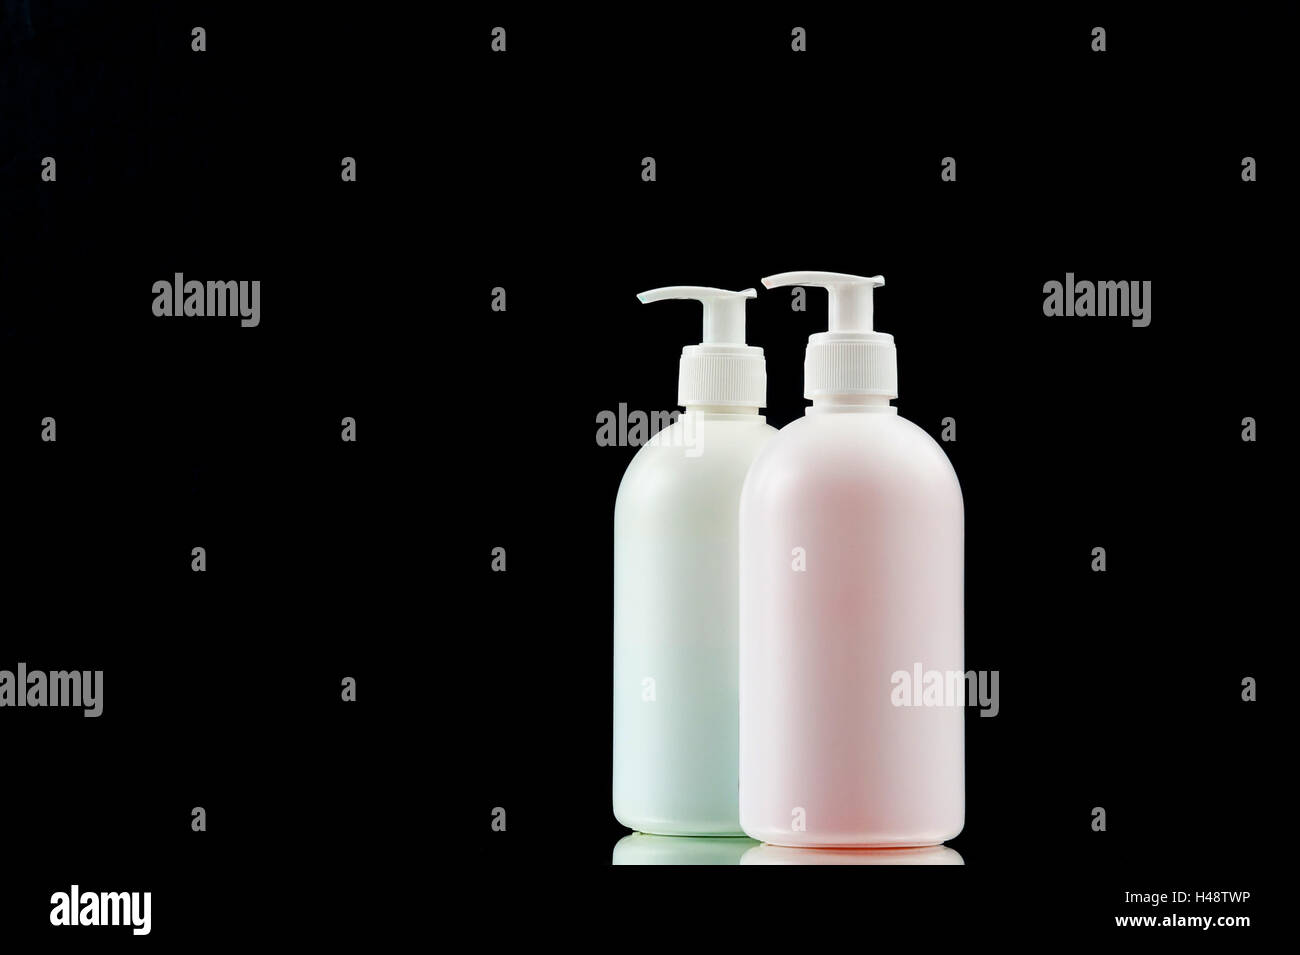 https://c8.alamy.com/comp/H48TWP/plastic-dispenser-with-liquid-soap-on-a-black-background-H48TWP.jpg